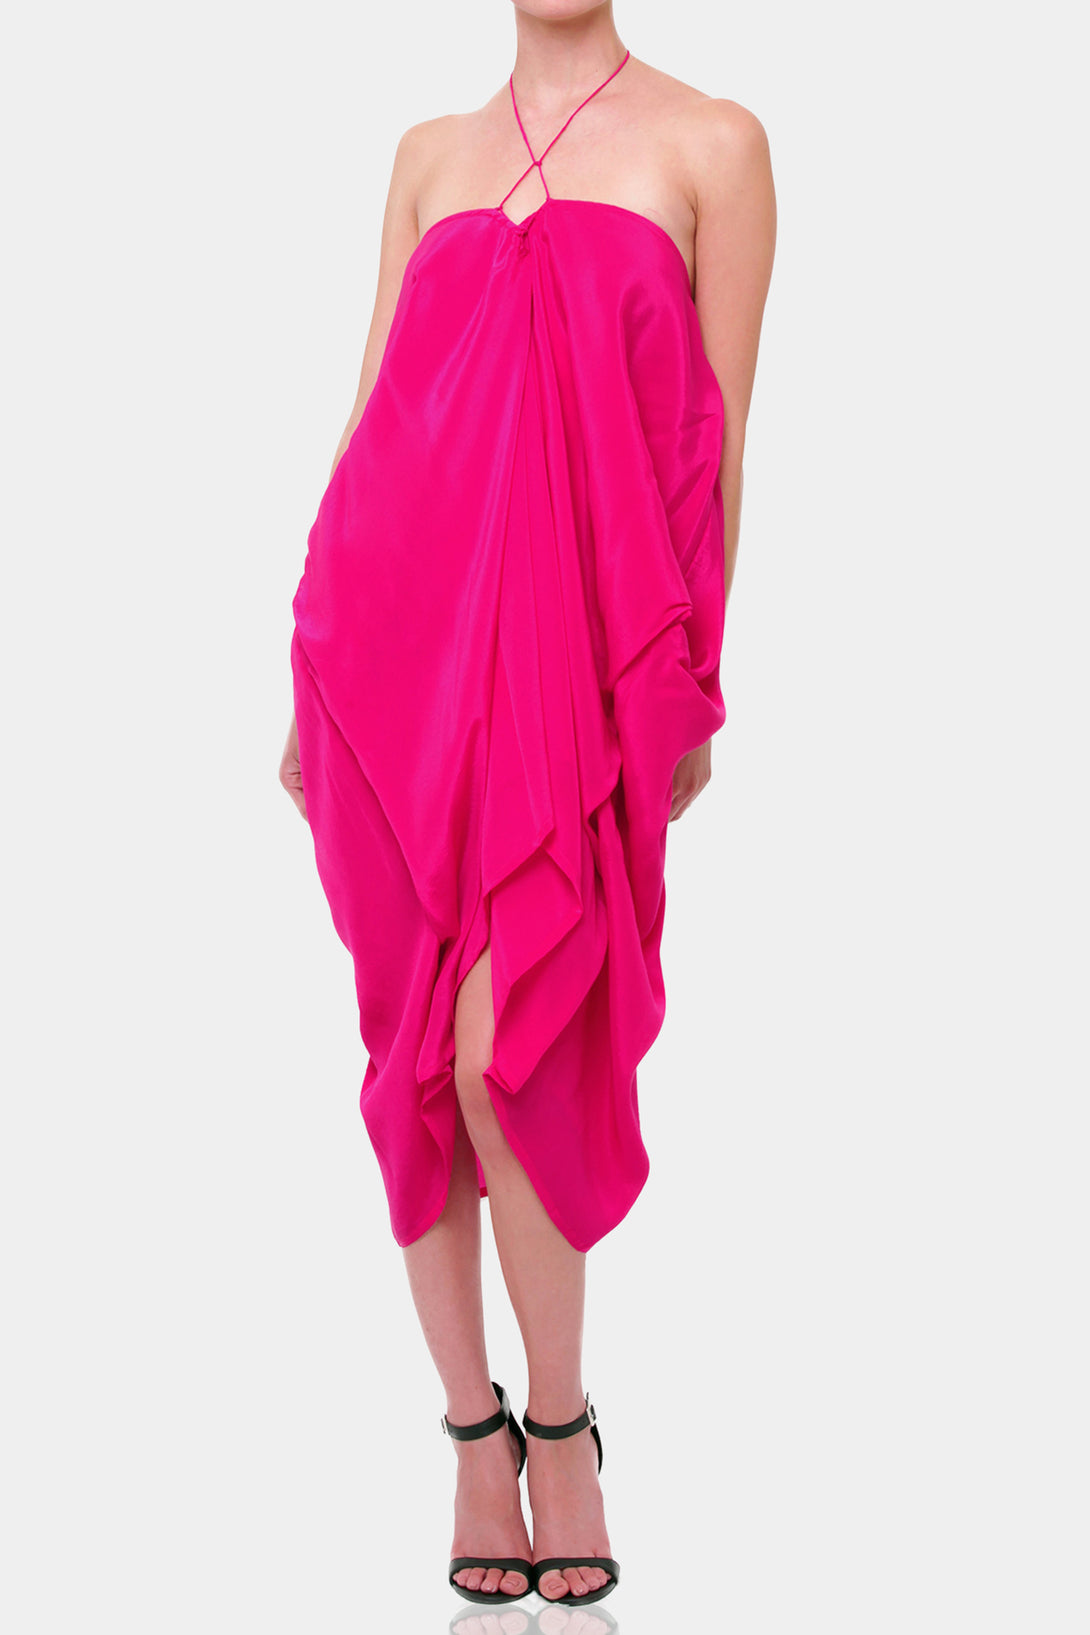  pink short formal dresses, plus size kaftan, short sleeveless party dress, Shahida Parides, cute short dresses,